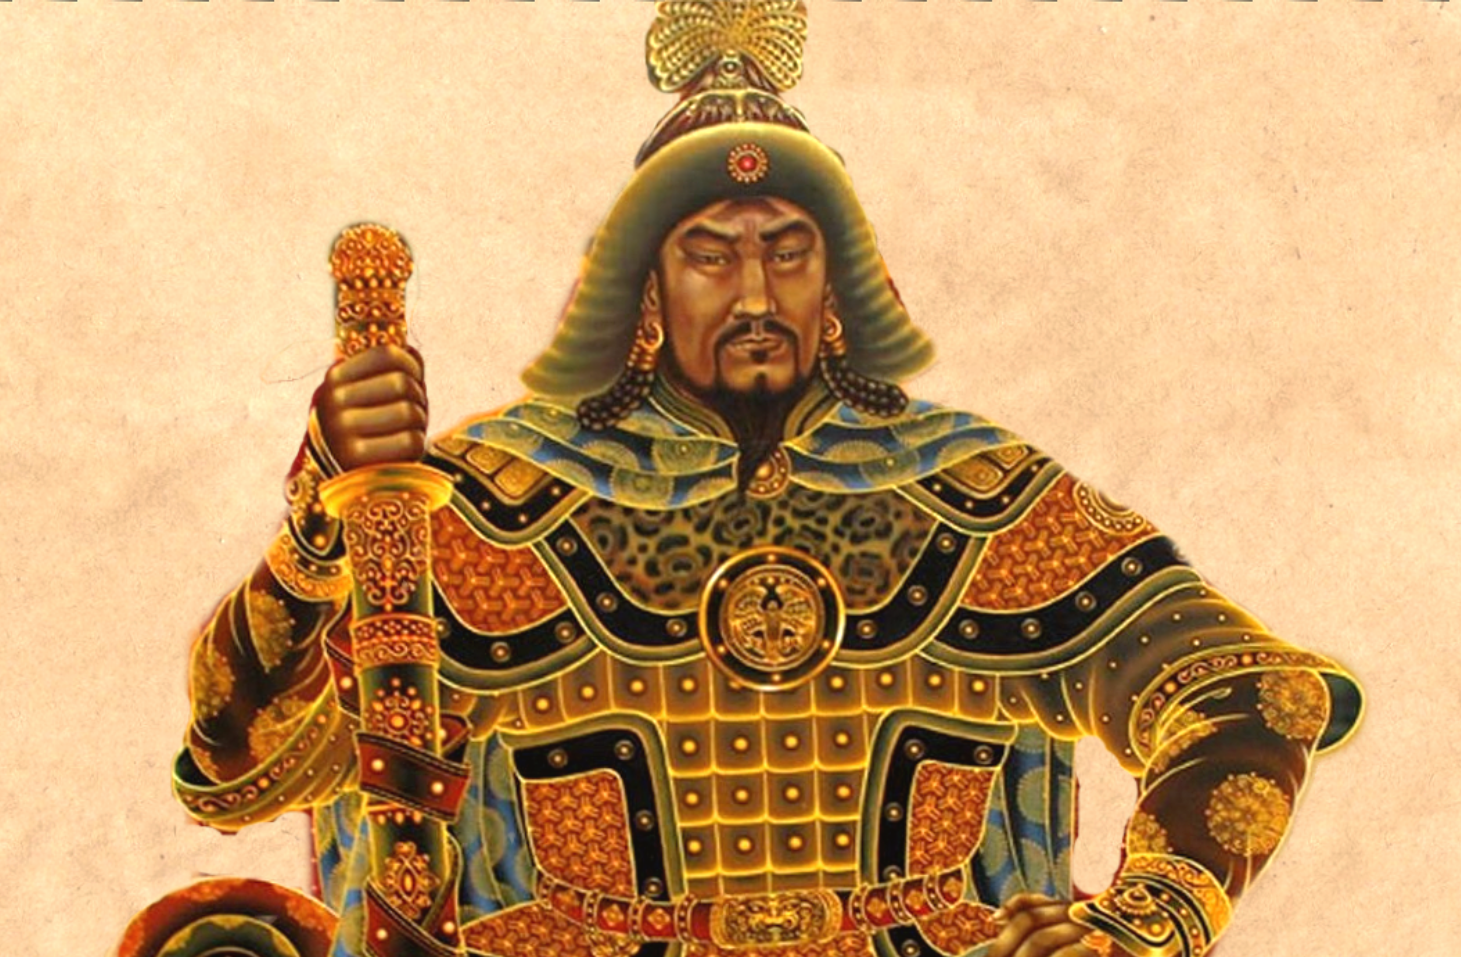 Сын чингисхана унаследовавший титул хана. Батый монгольский Хан. Золотая Орда Хан Батый. Батый монгольский военачальник.